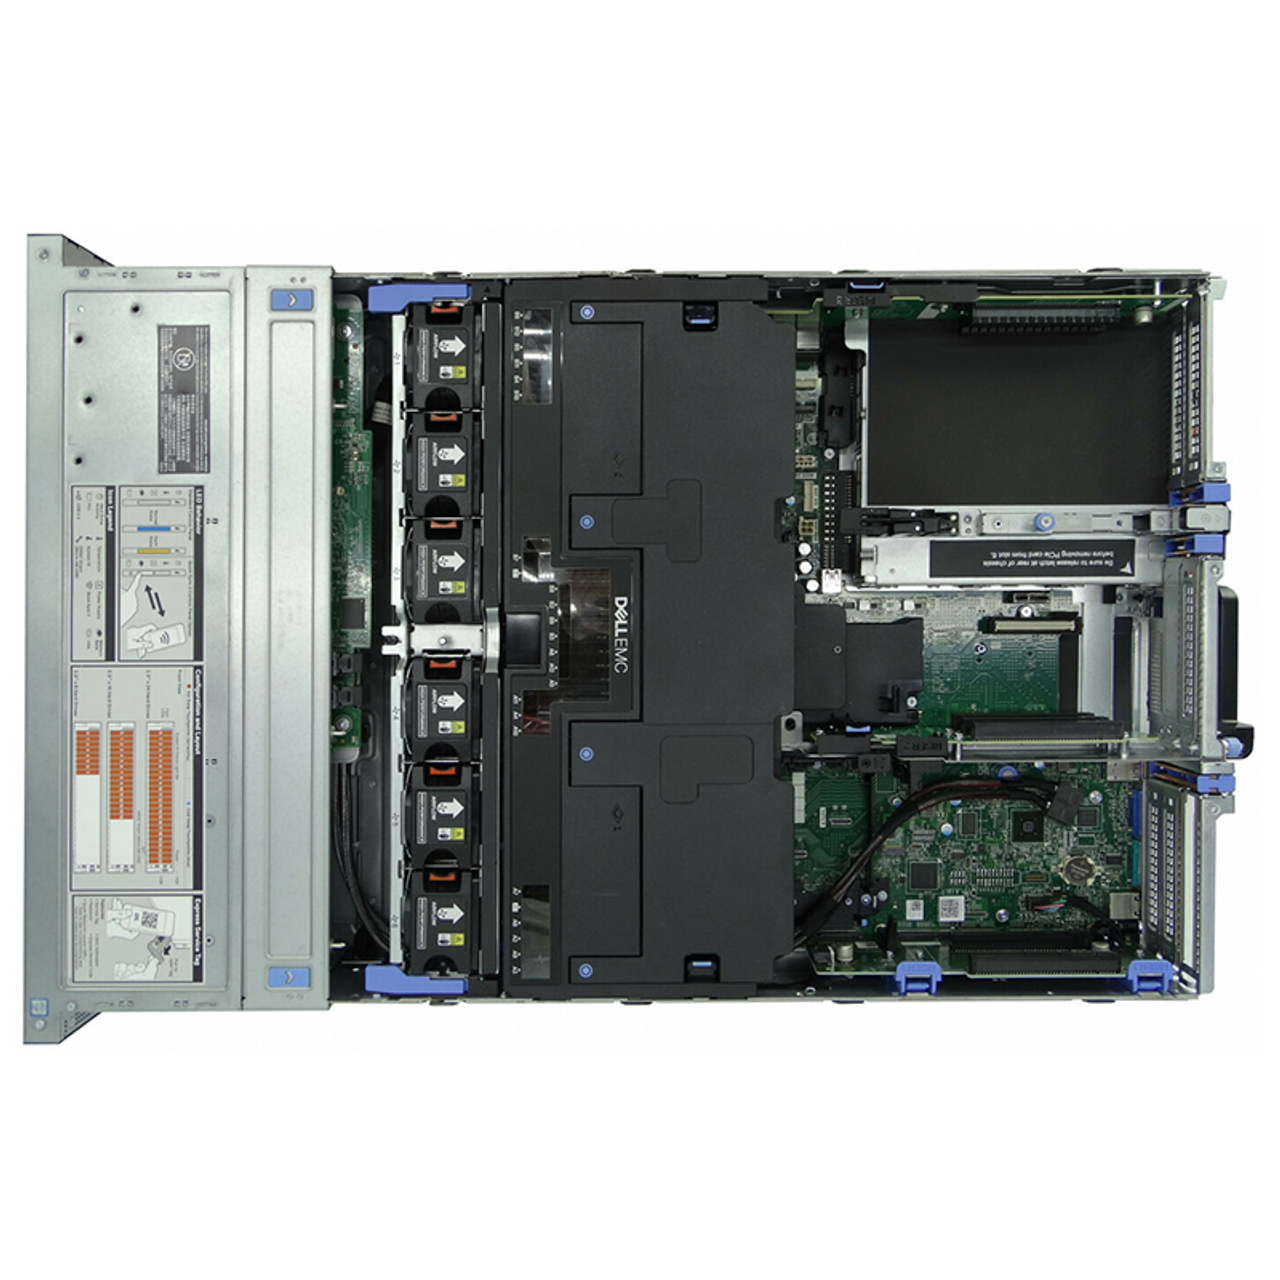 Dell EMC 14G PowerEdge R740 - 8 Bay 2.5 Inch Small Form Factor - 2U Server  - Configure to Order